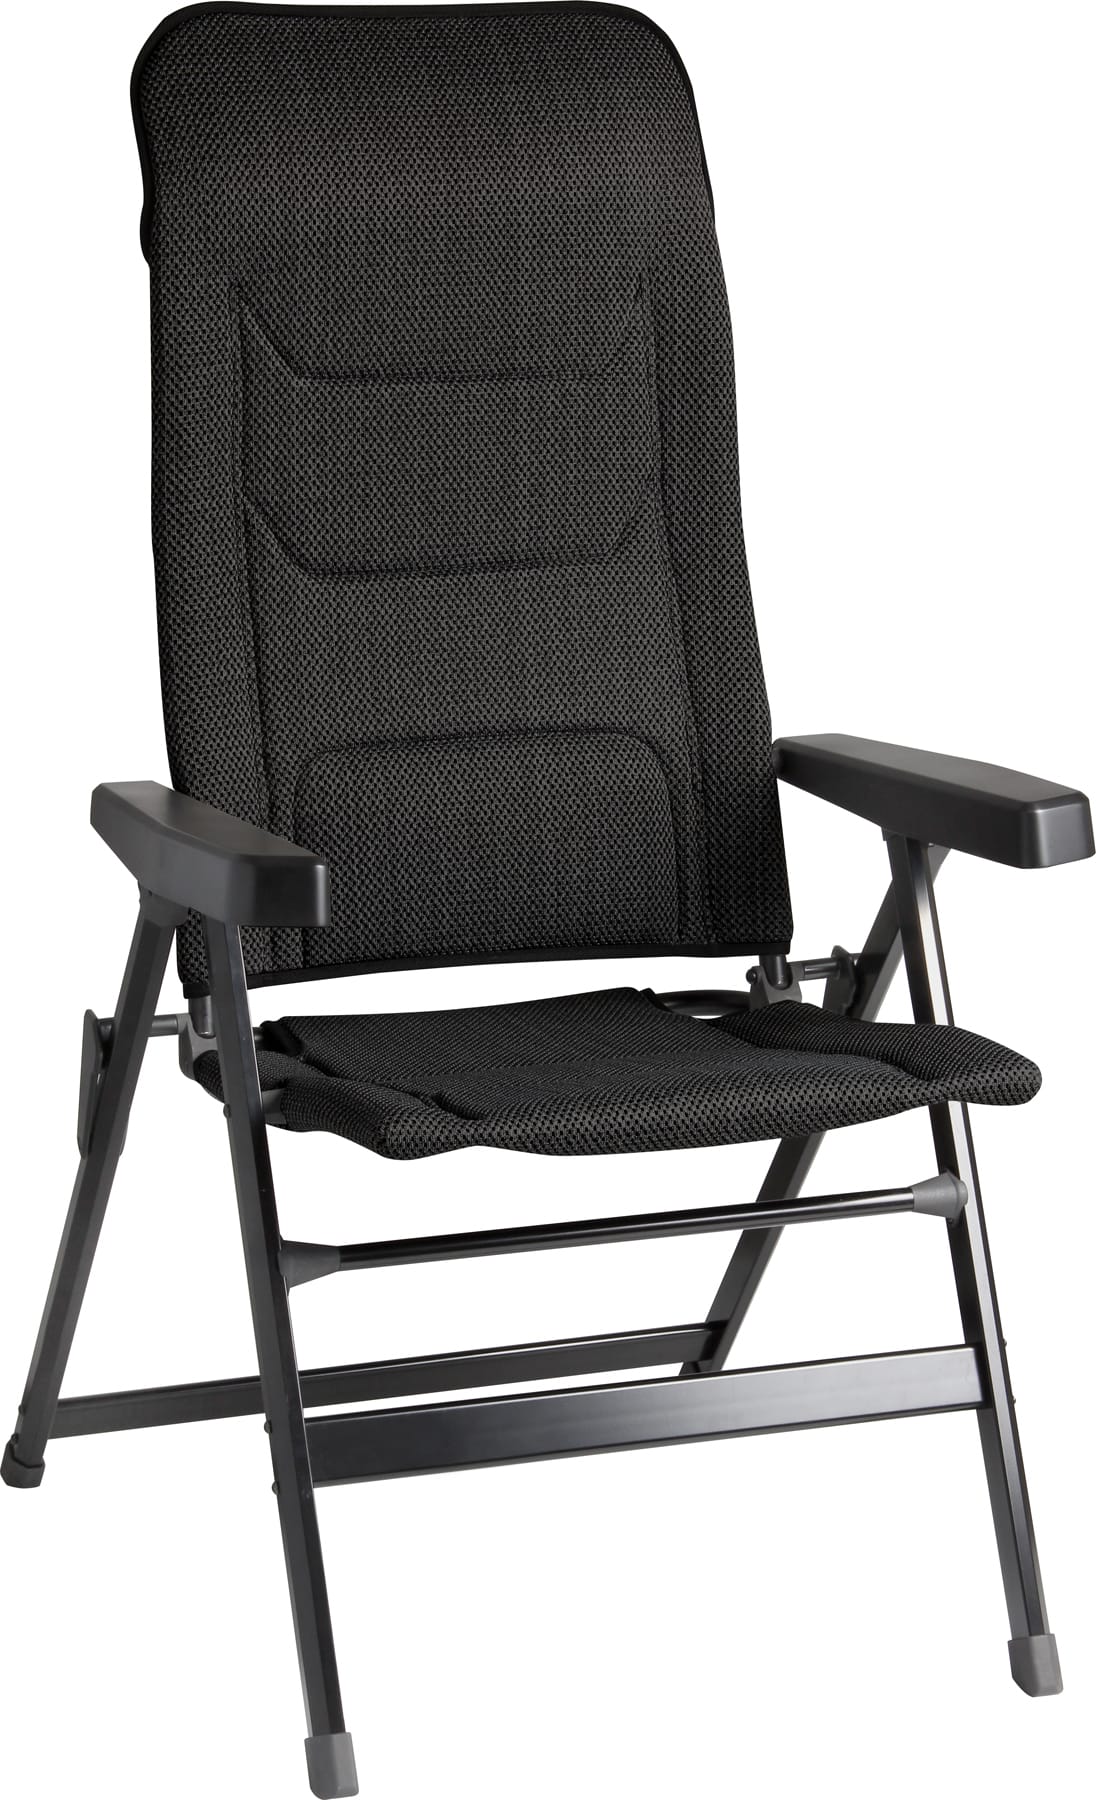 Brunner Rebel Pro Premium Reclining Camping Chair